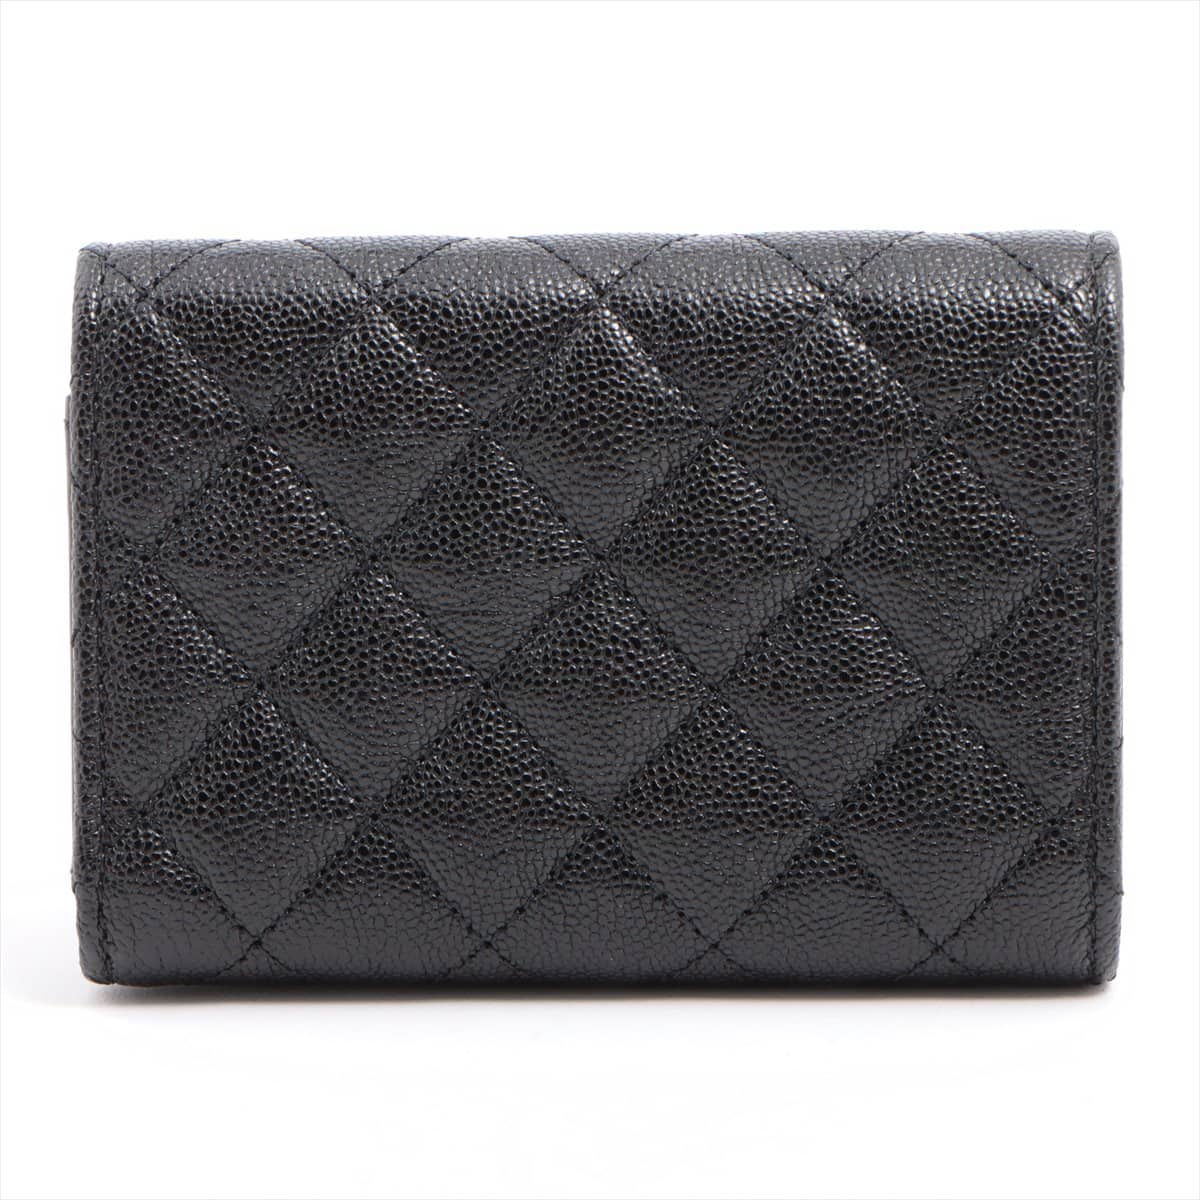 Chanel Boy Chanel Caviarskin Wallet Black Gold Metal fittings 27th